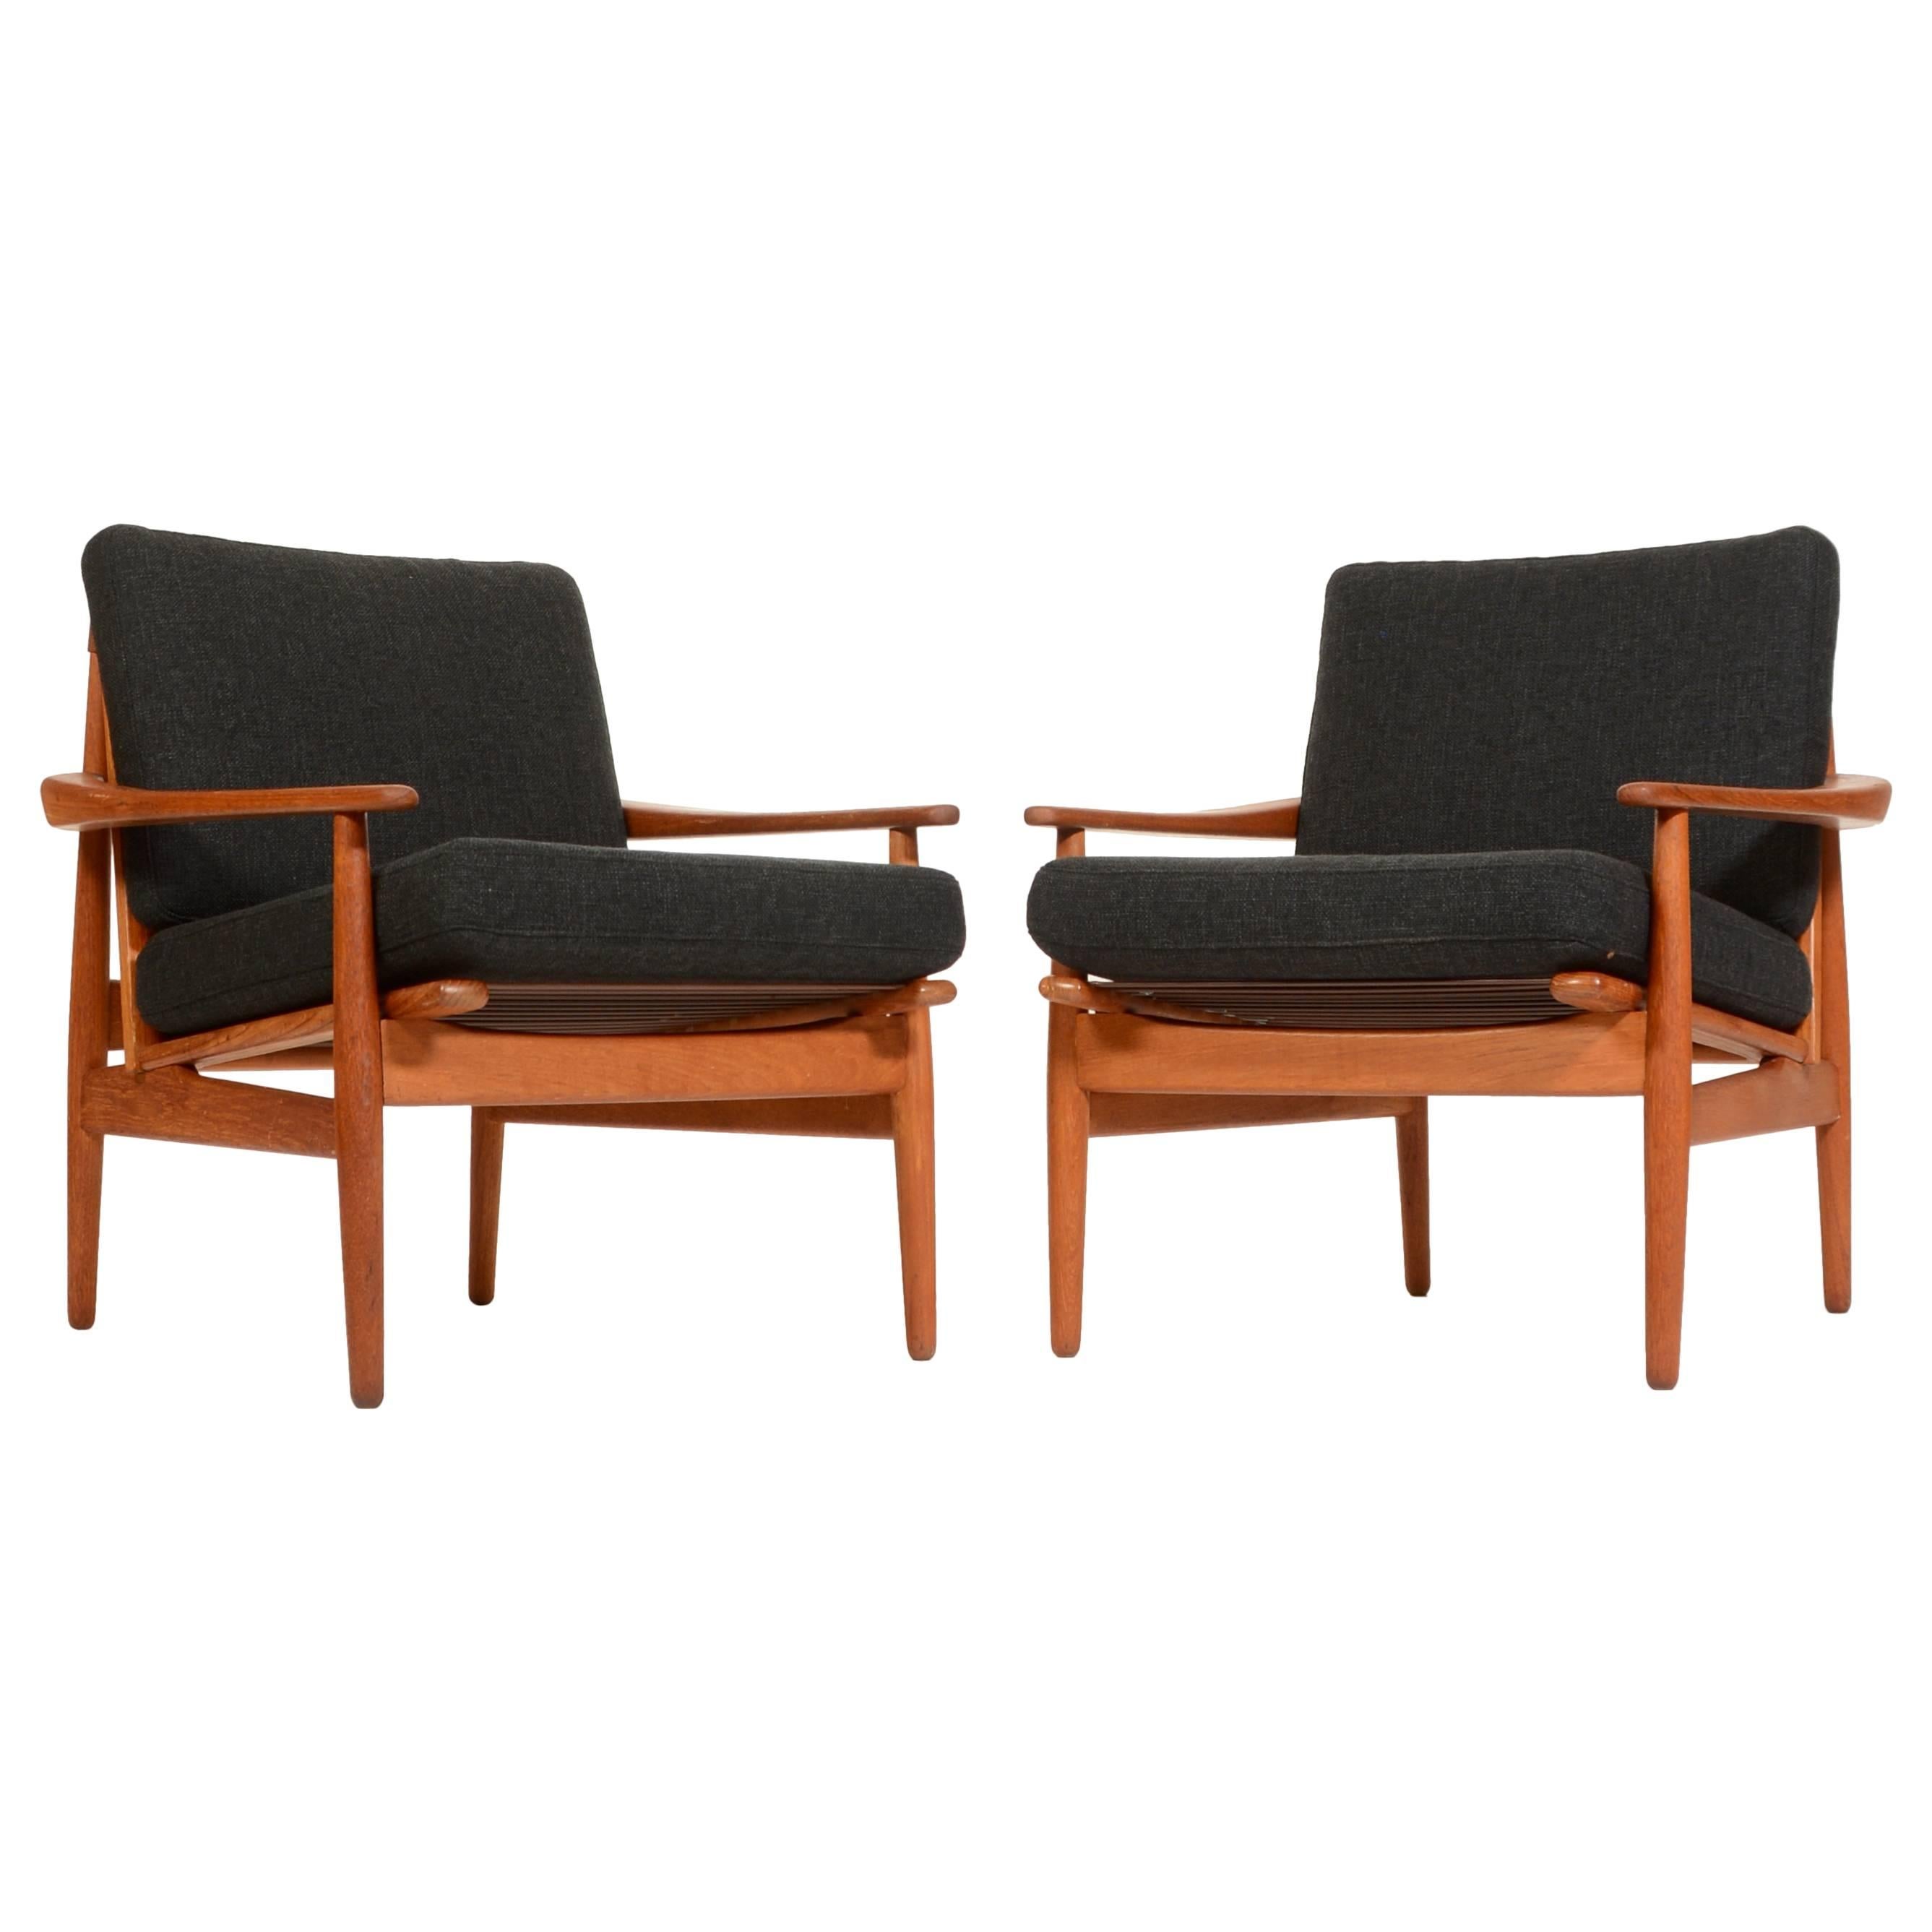 Pair of Danish Modern Greta Jalk Style Teak Lounge Chairs